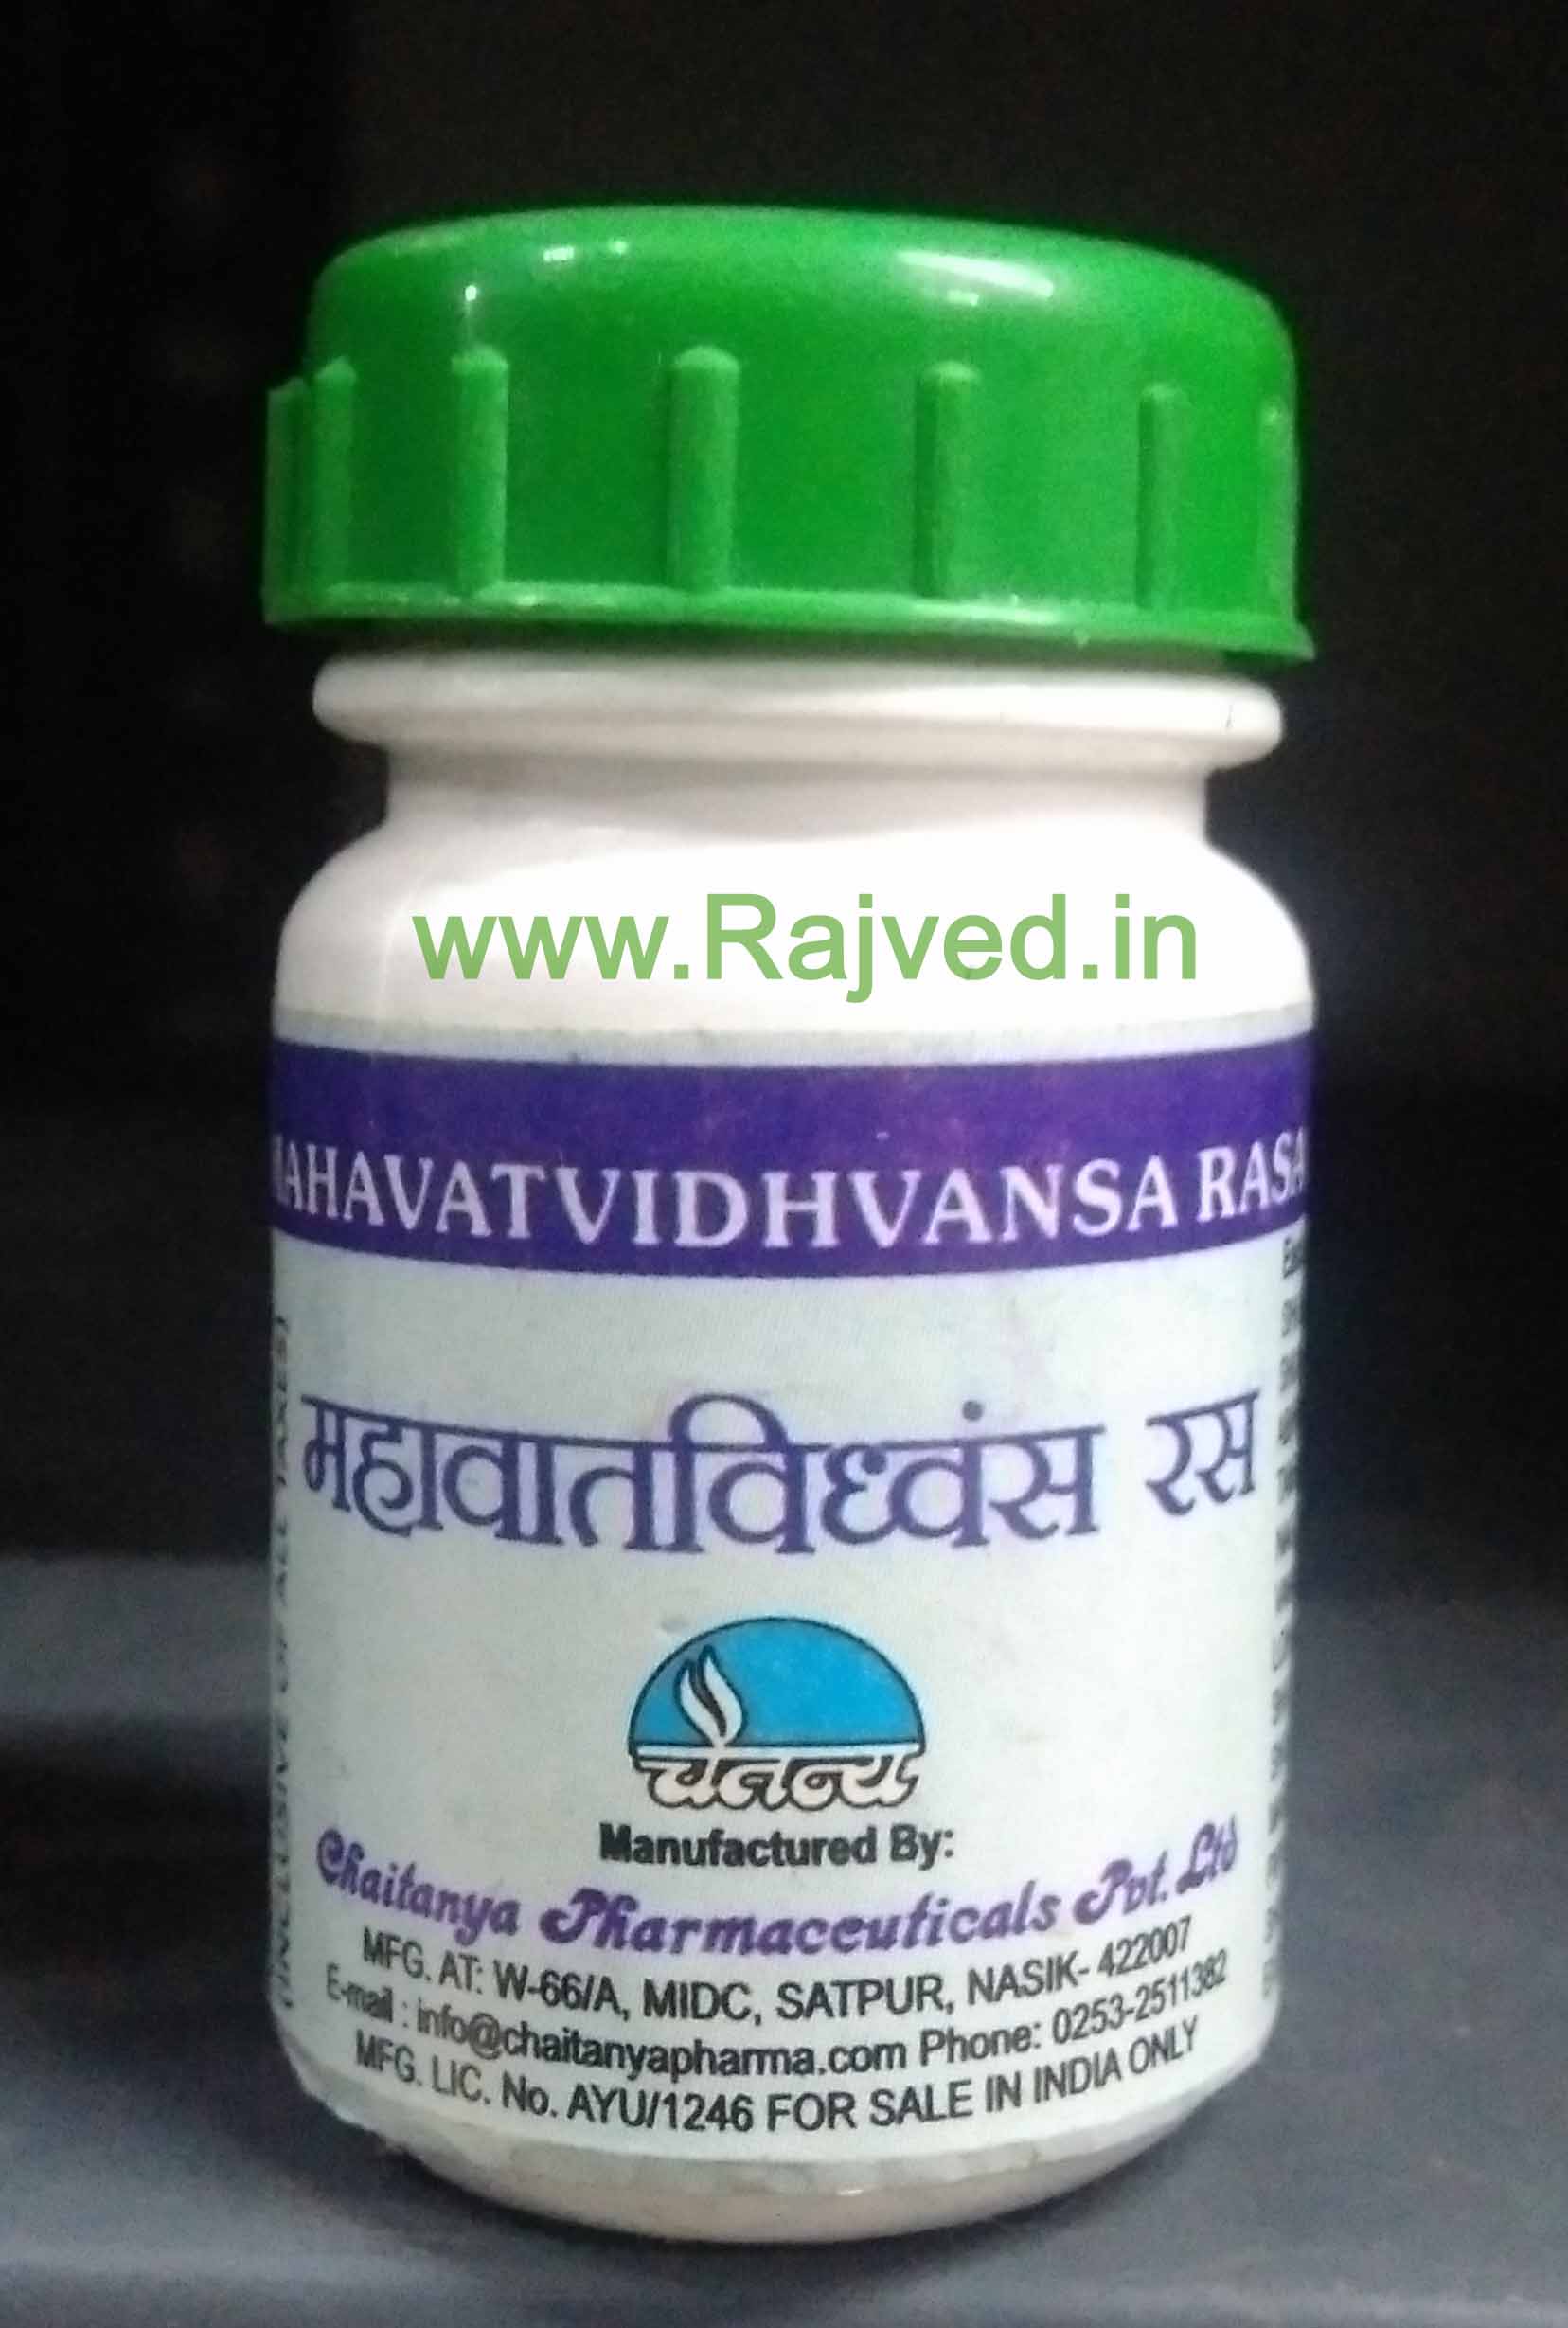 mahavatvidhvansa rasa 4000 tab upto 20% off free shipping chaitanya pharmaceuticals